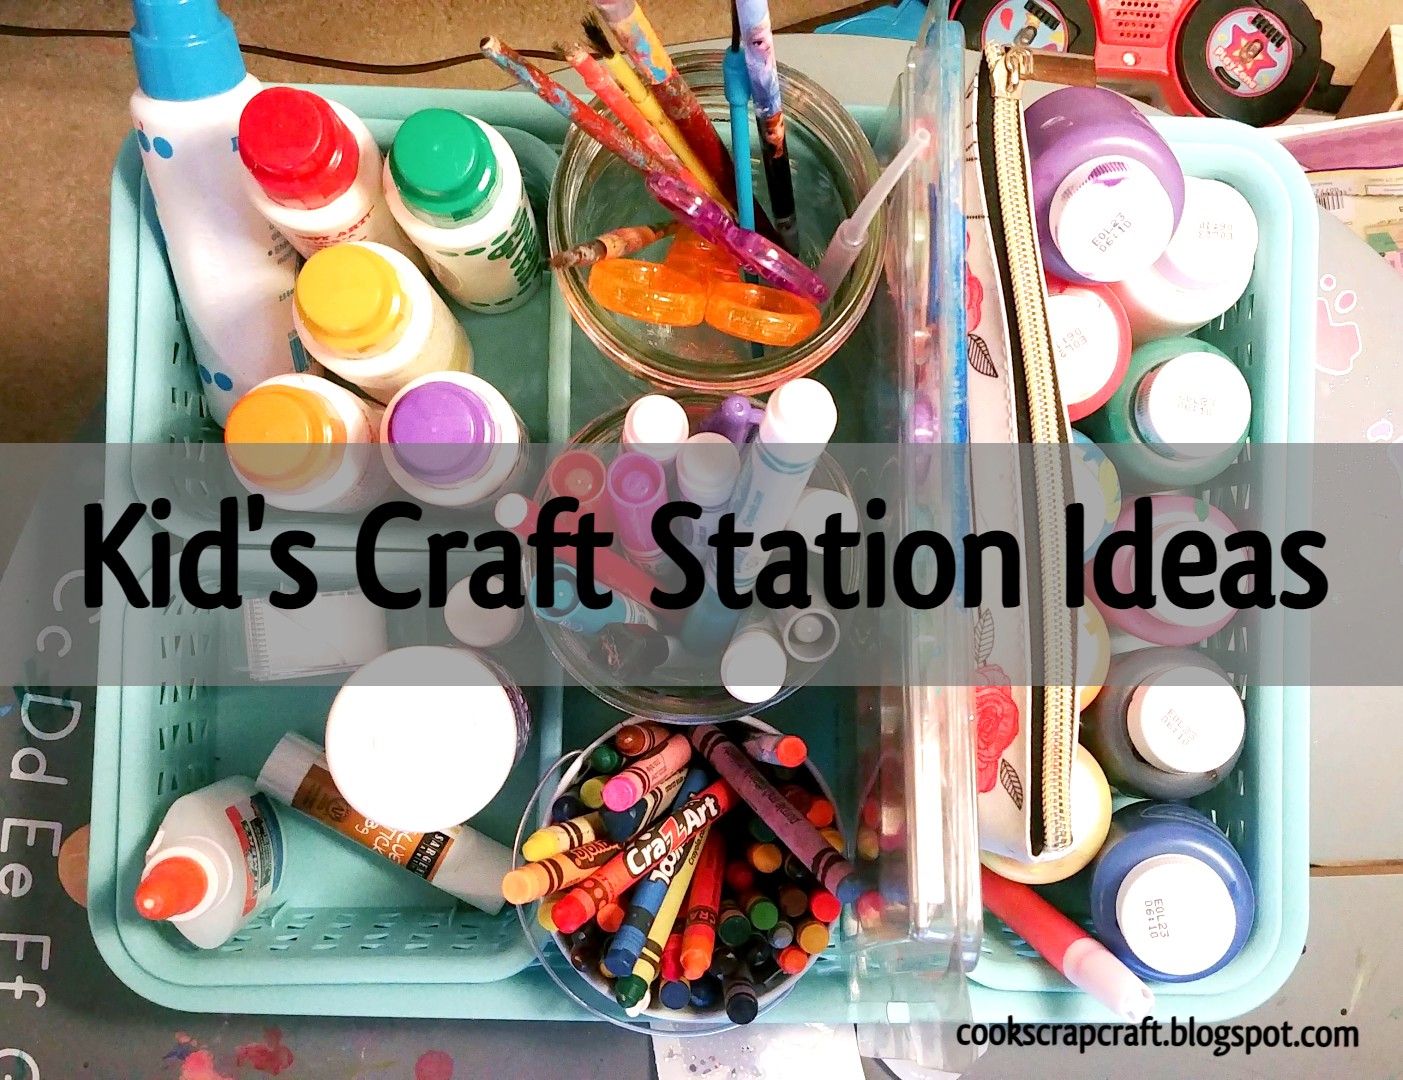 Kid's Craft Station Ideas